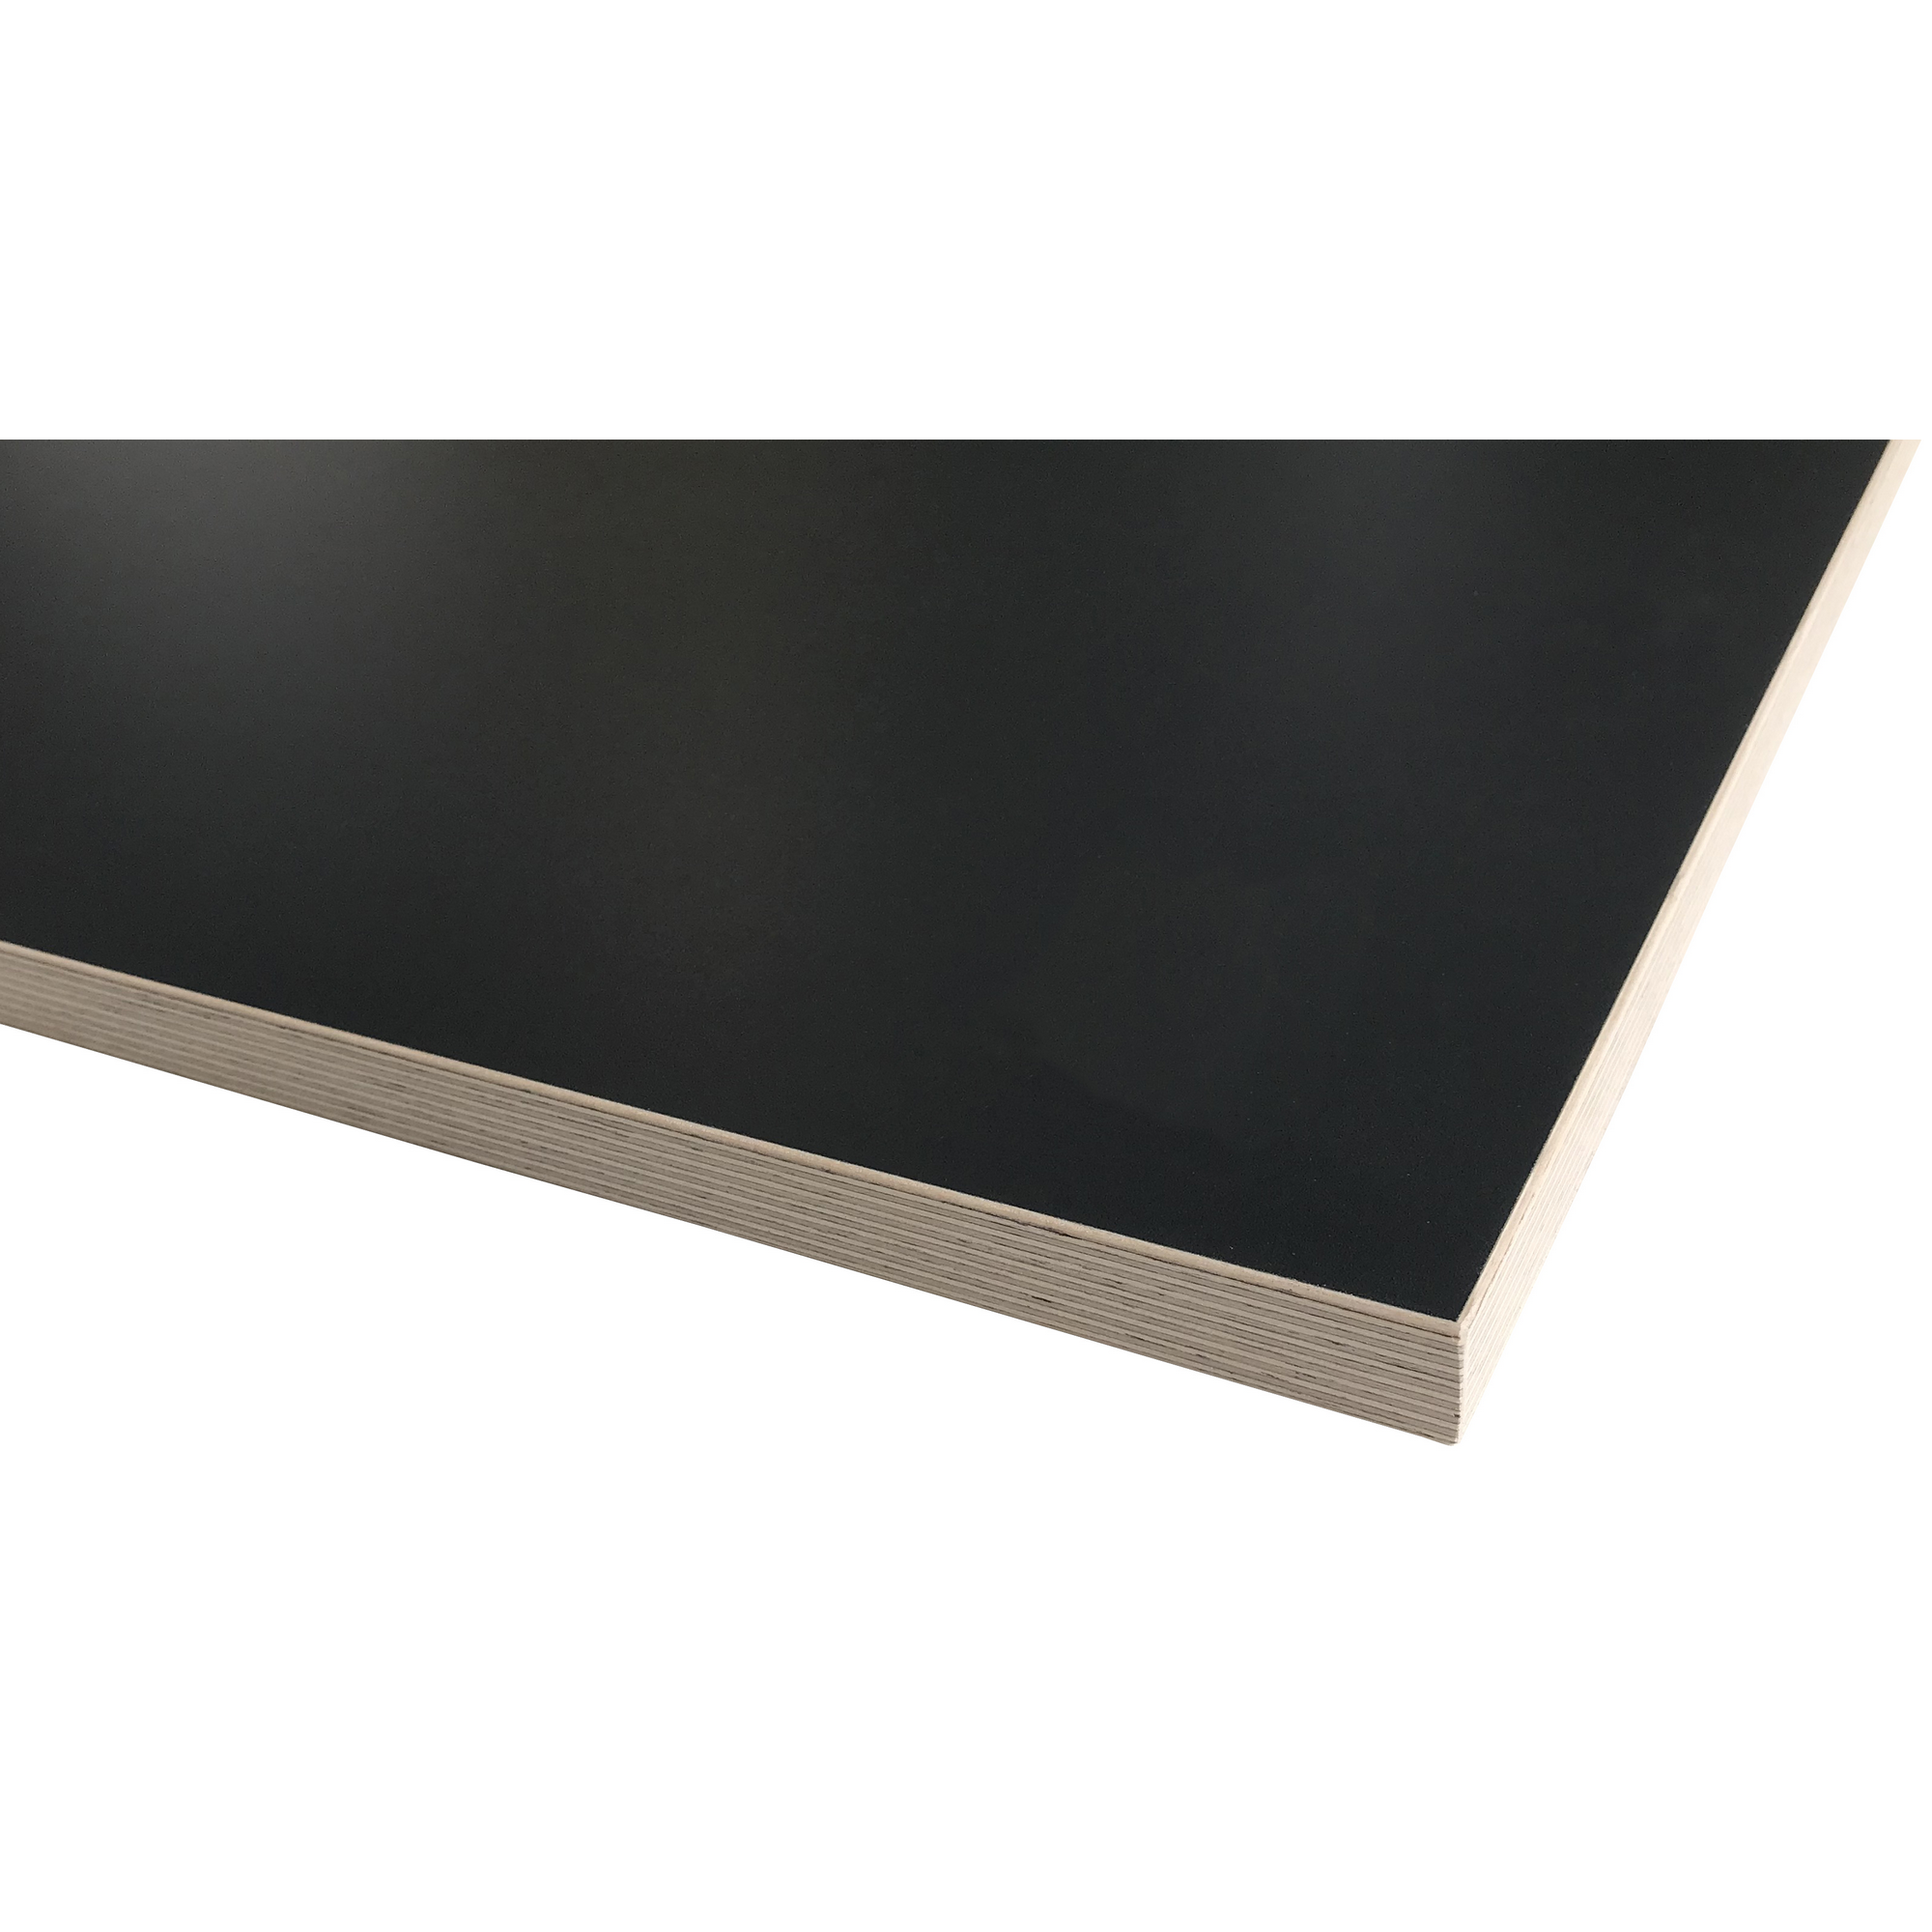 Tischplatte Dekorspan anthrazit 200 x 80 x 2,5 cm + product picture